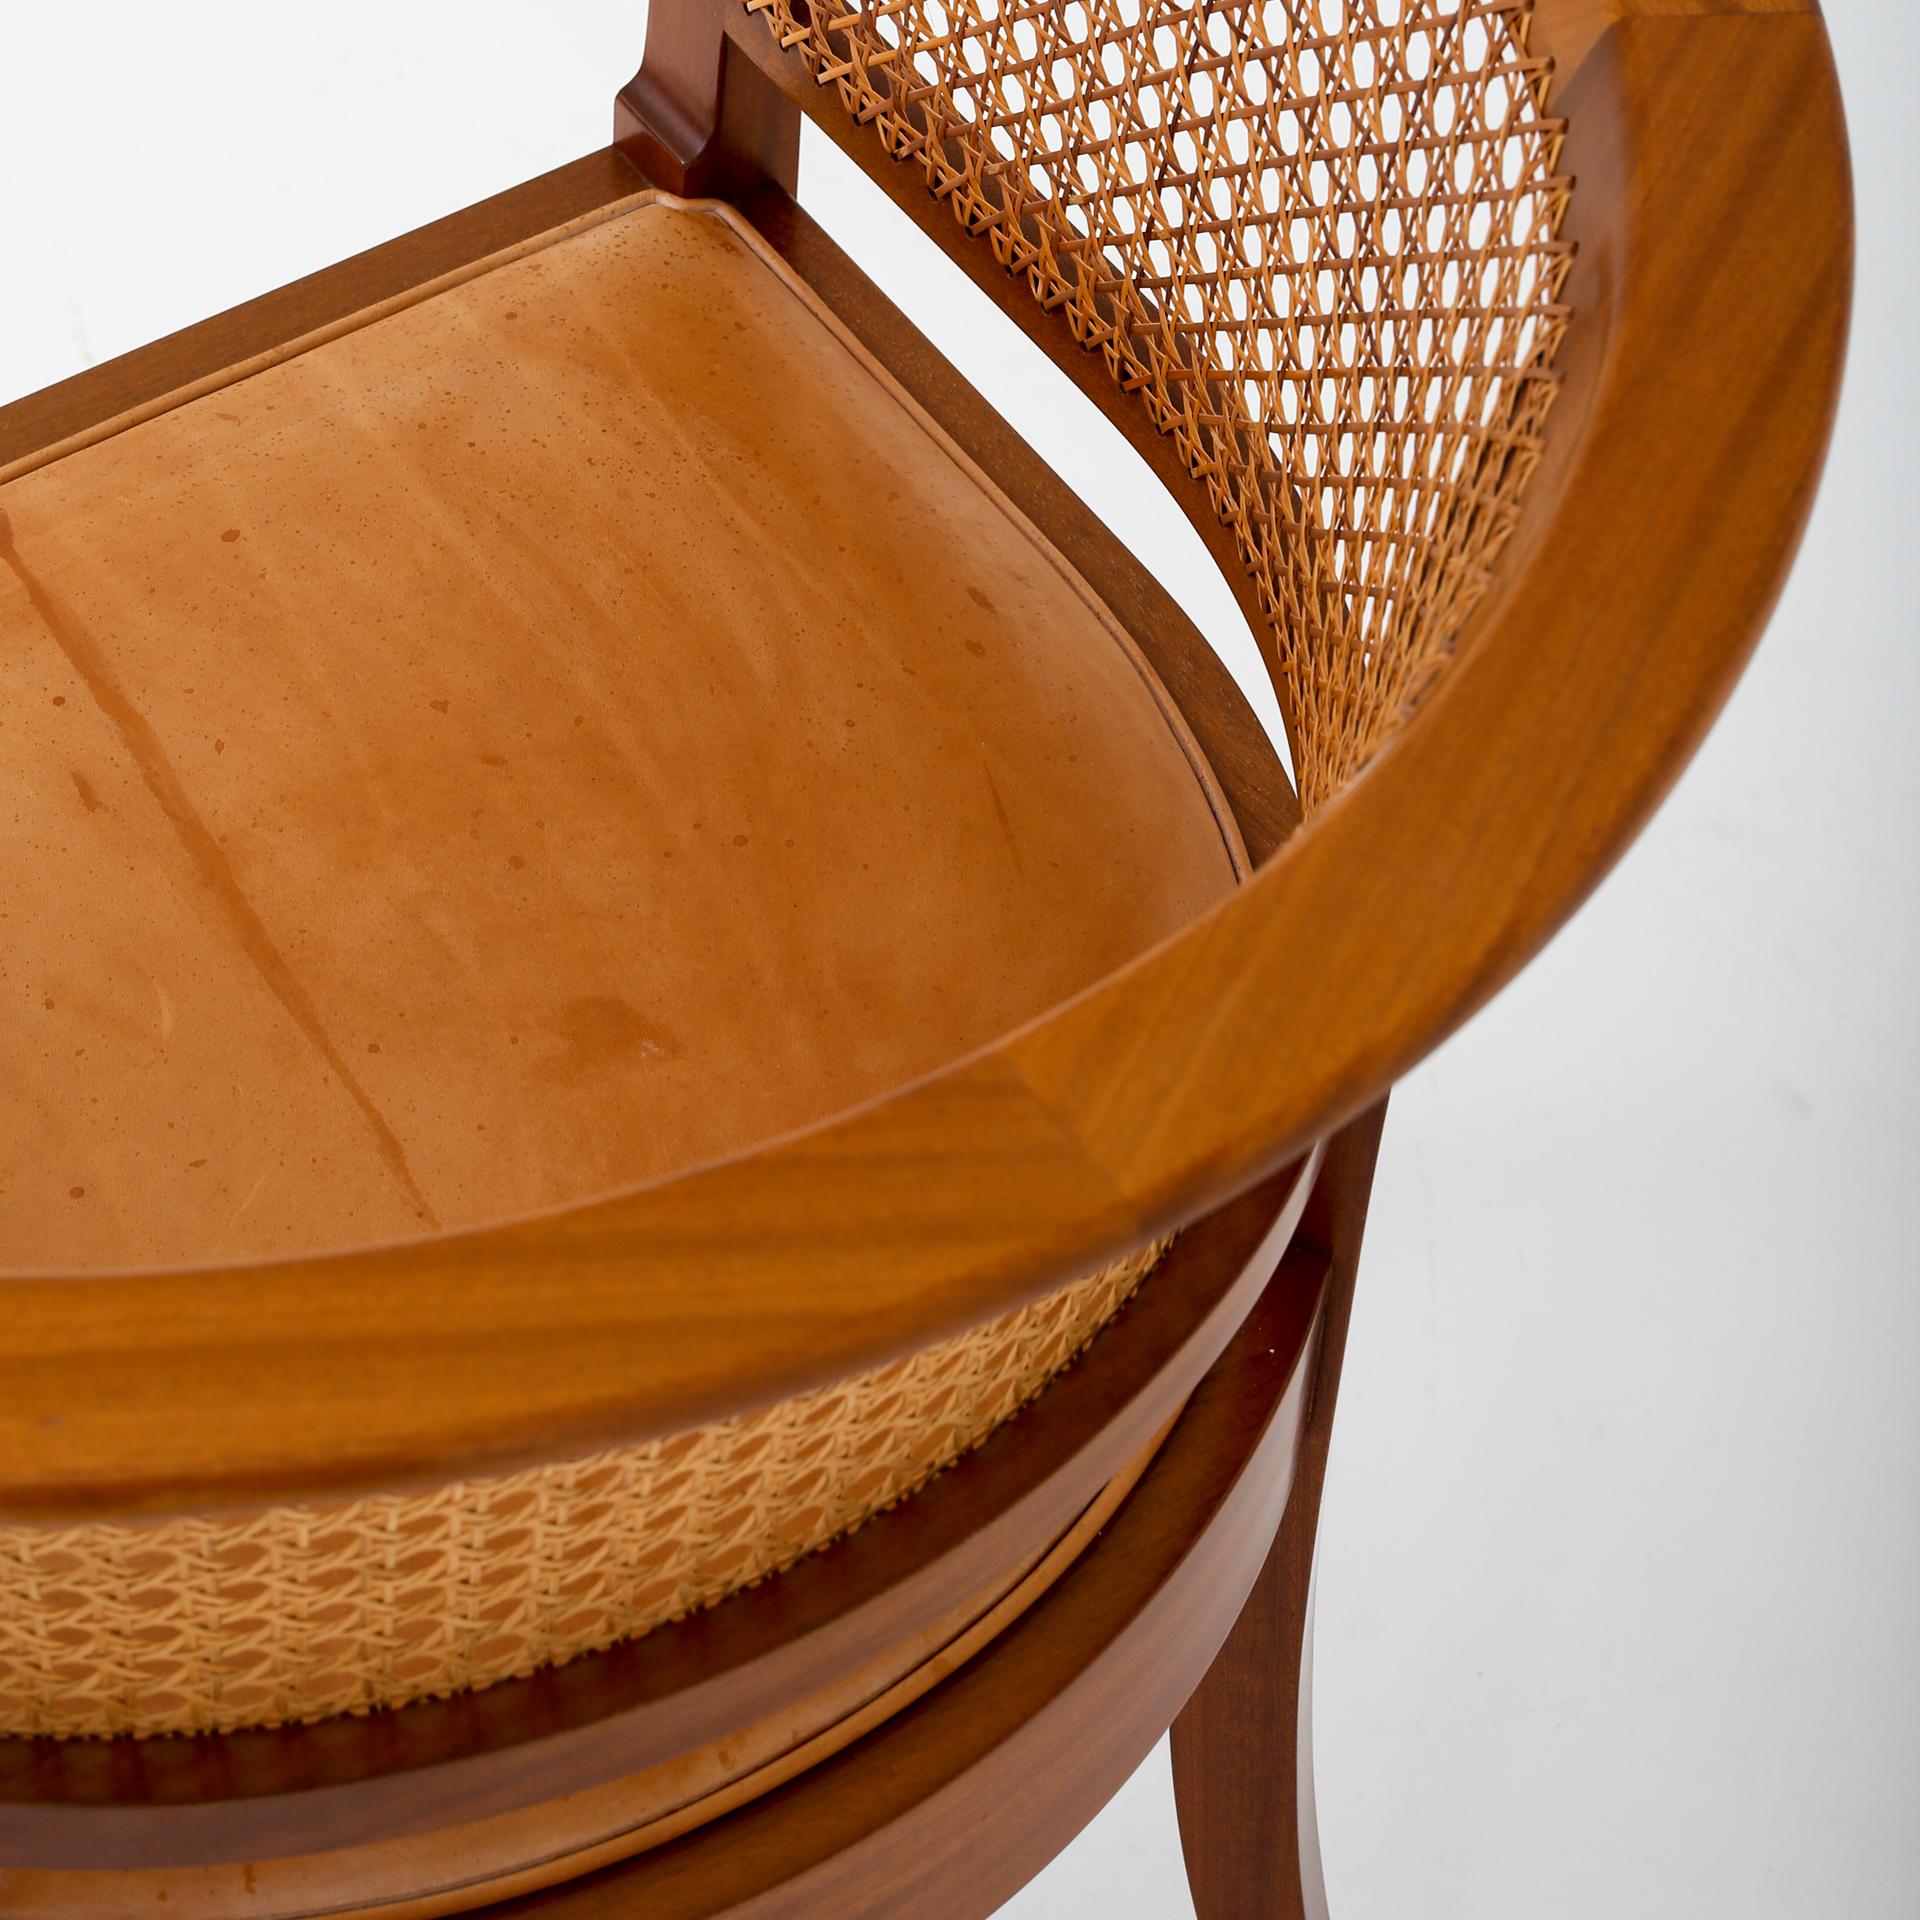 Faaborg Chair by Kaare Klint 1